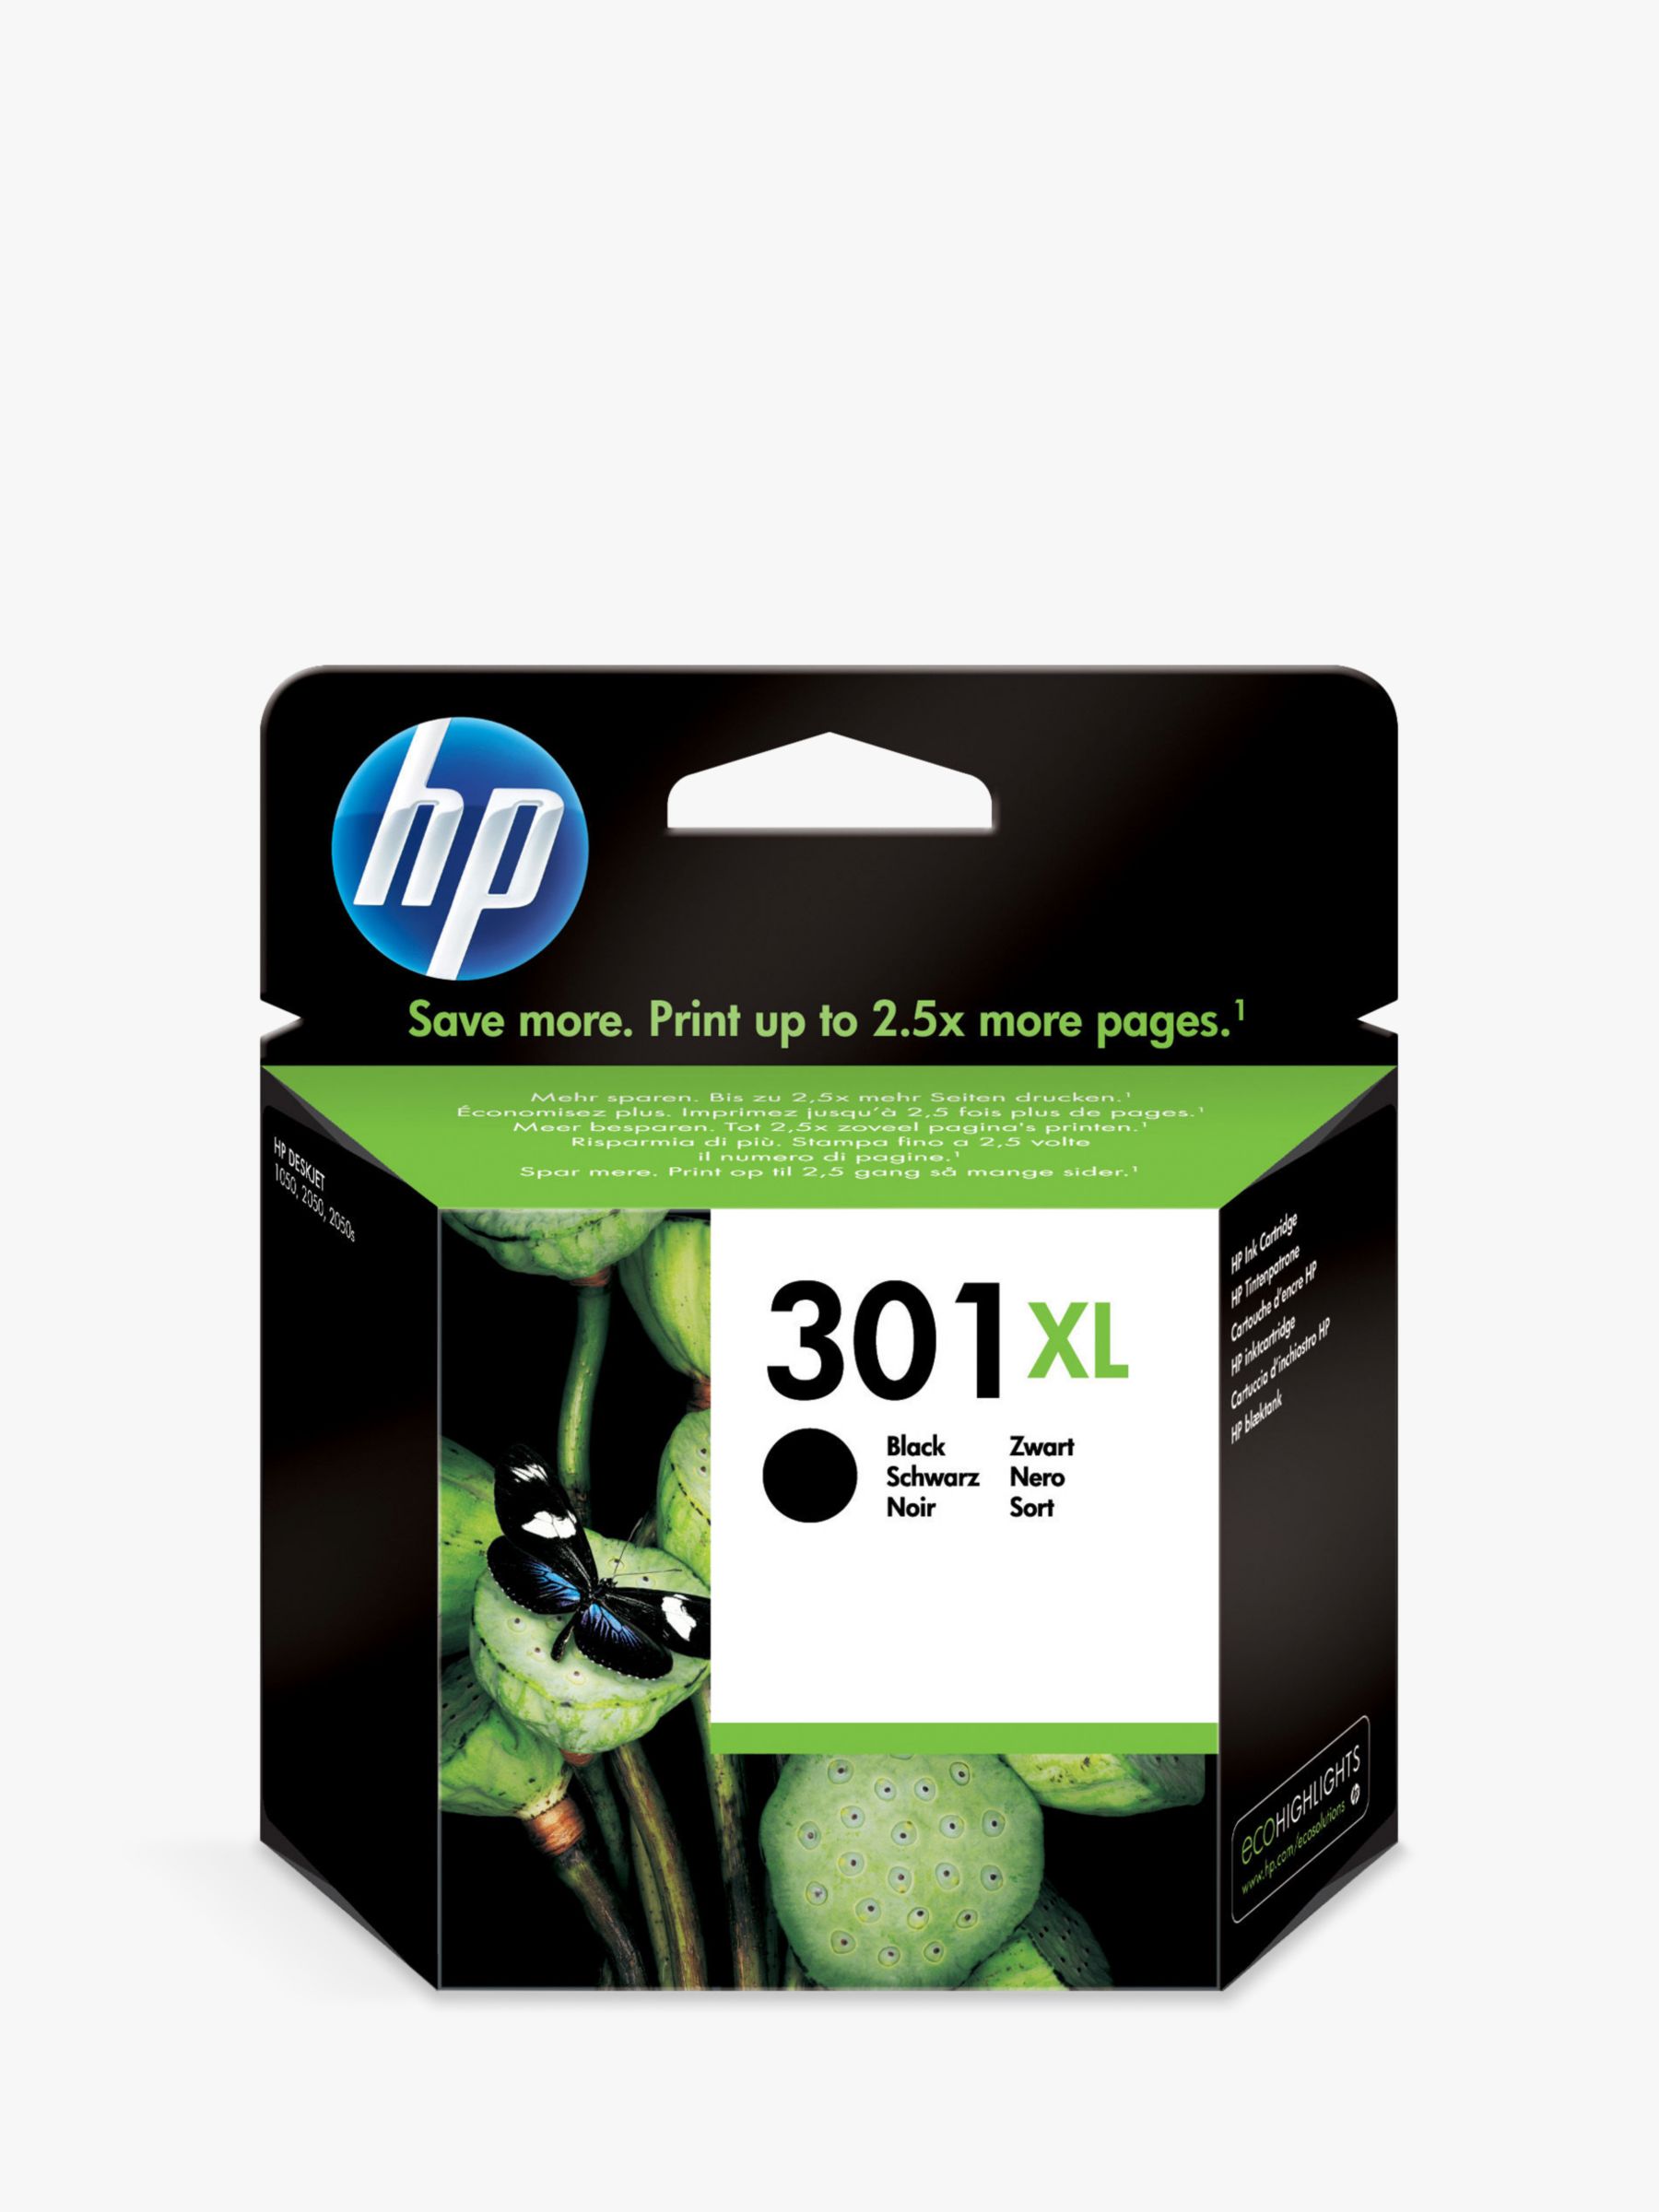 HP 301 XL Black Original Ink Cartridge, Single, Instant Compatible